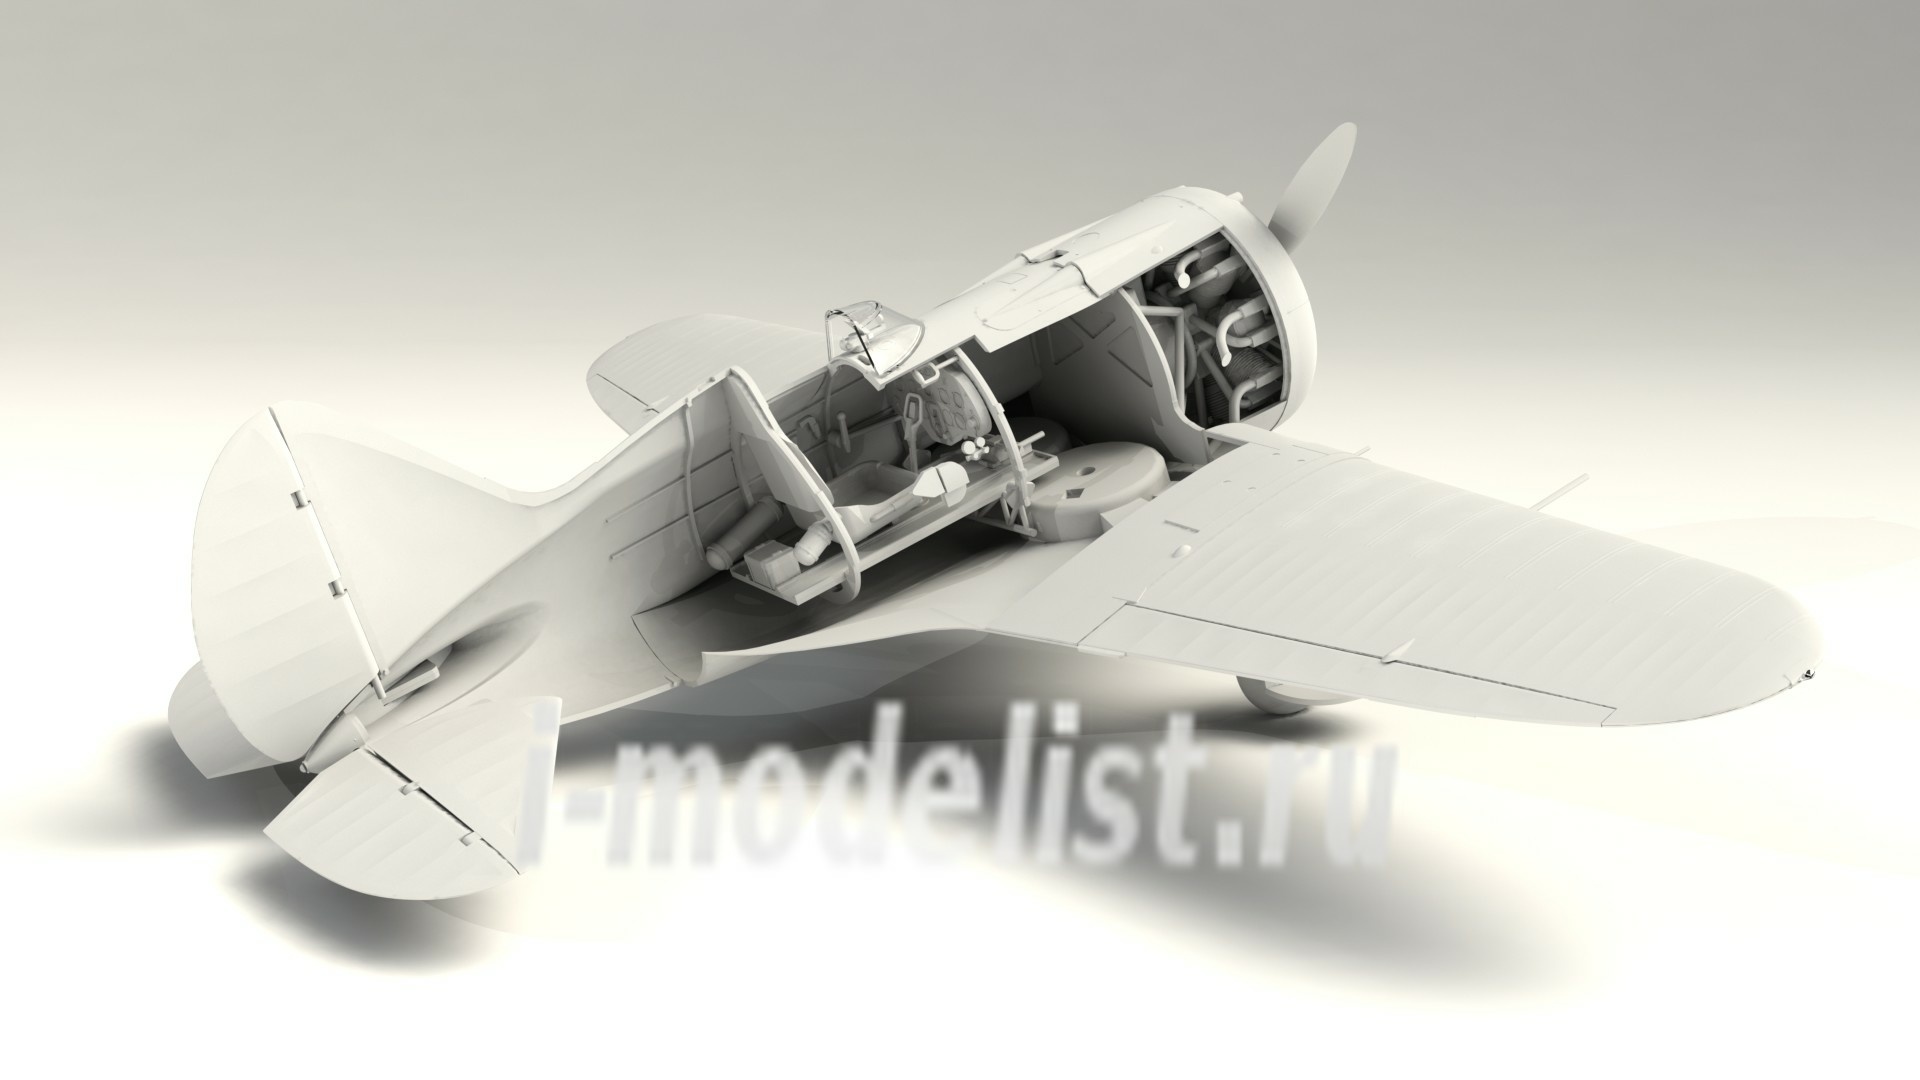 32004 ICM 1/32 Soviet fighter I-16 type 10